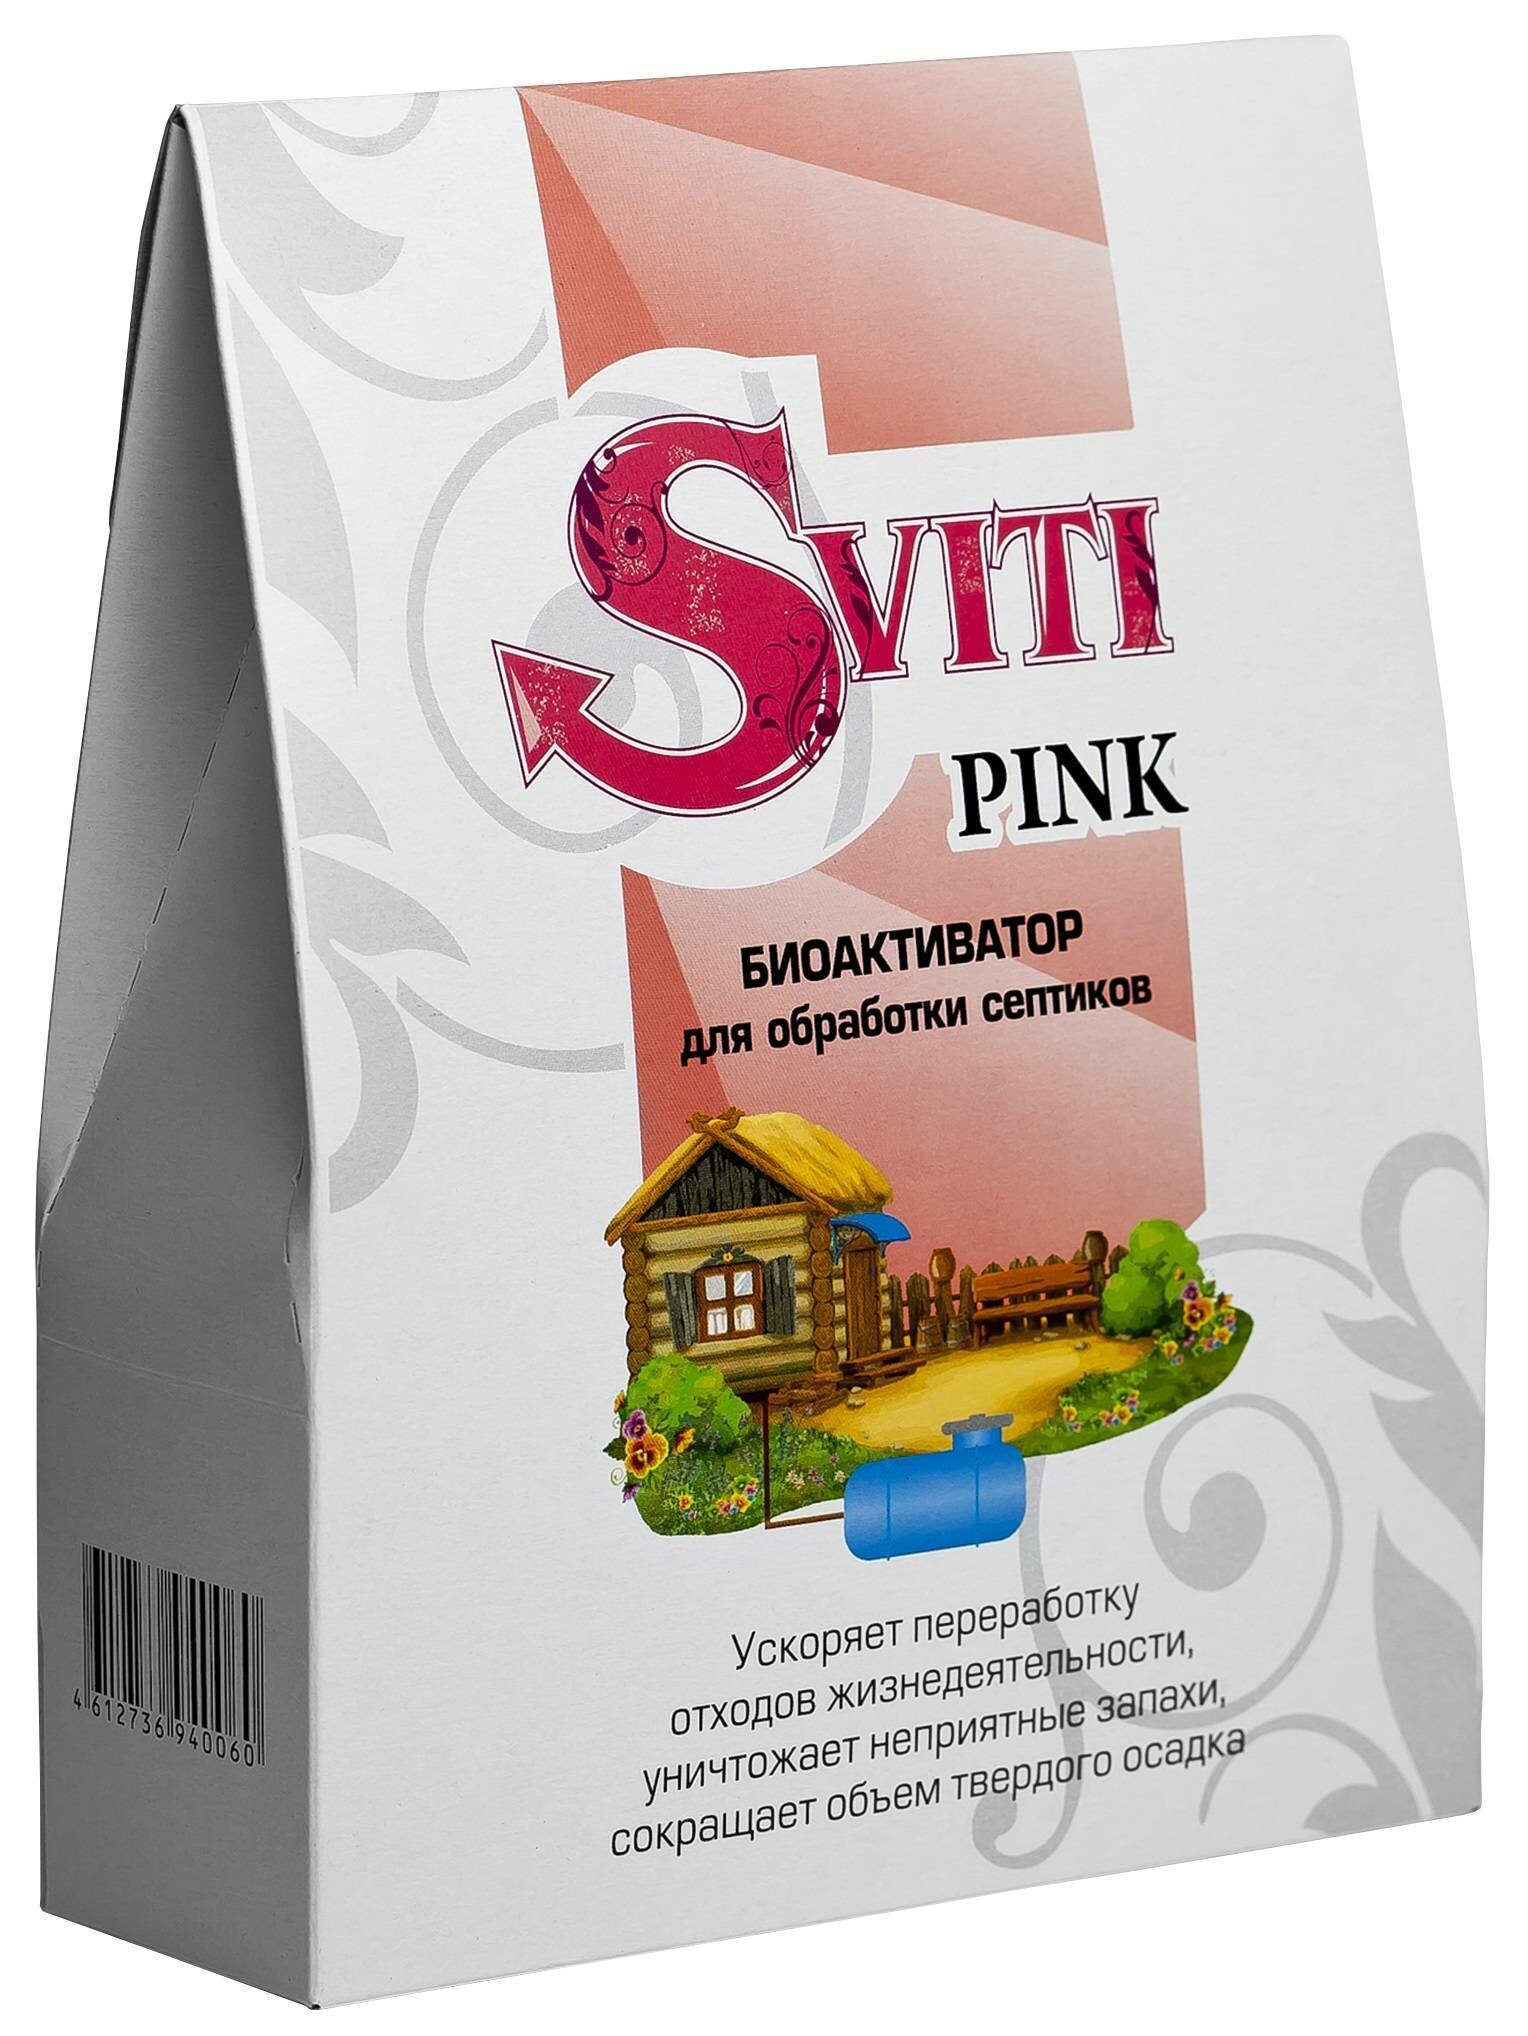 Средство Sviti Pink 2в1 биоактиватор био бактерии для чистки ямы септика - фотография № 1